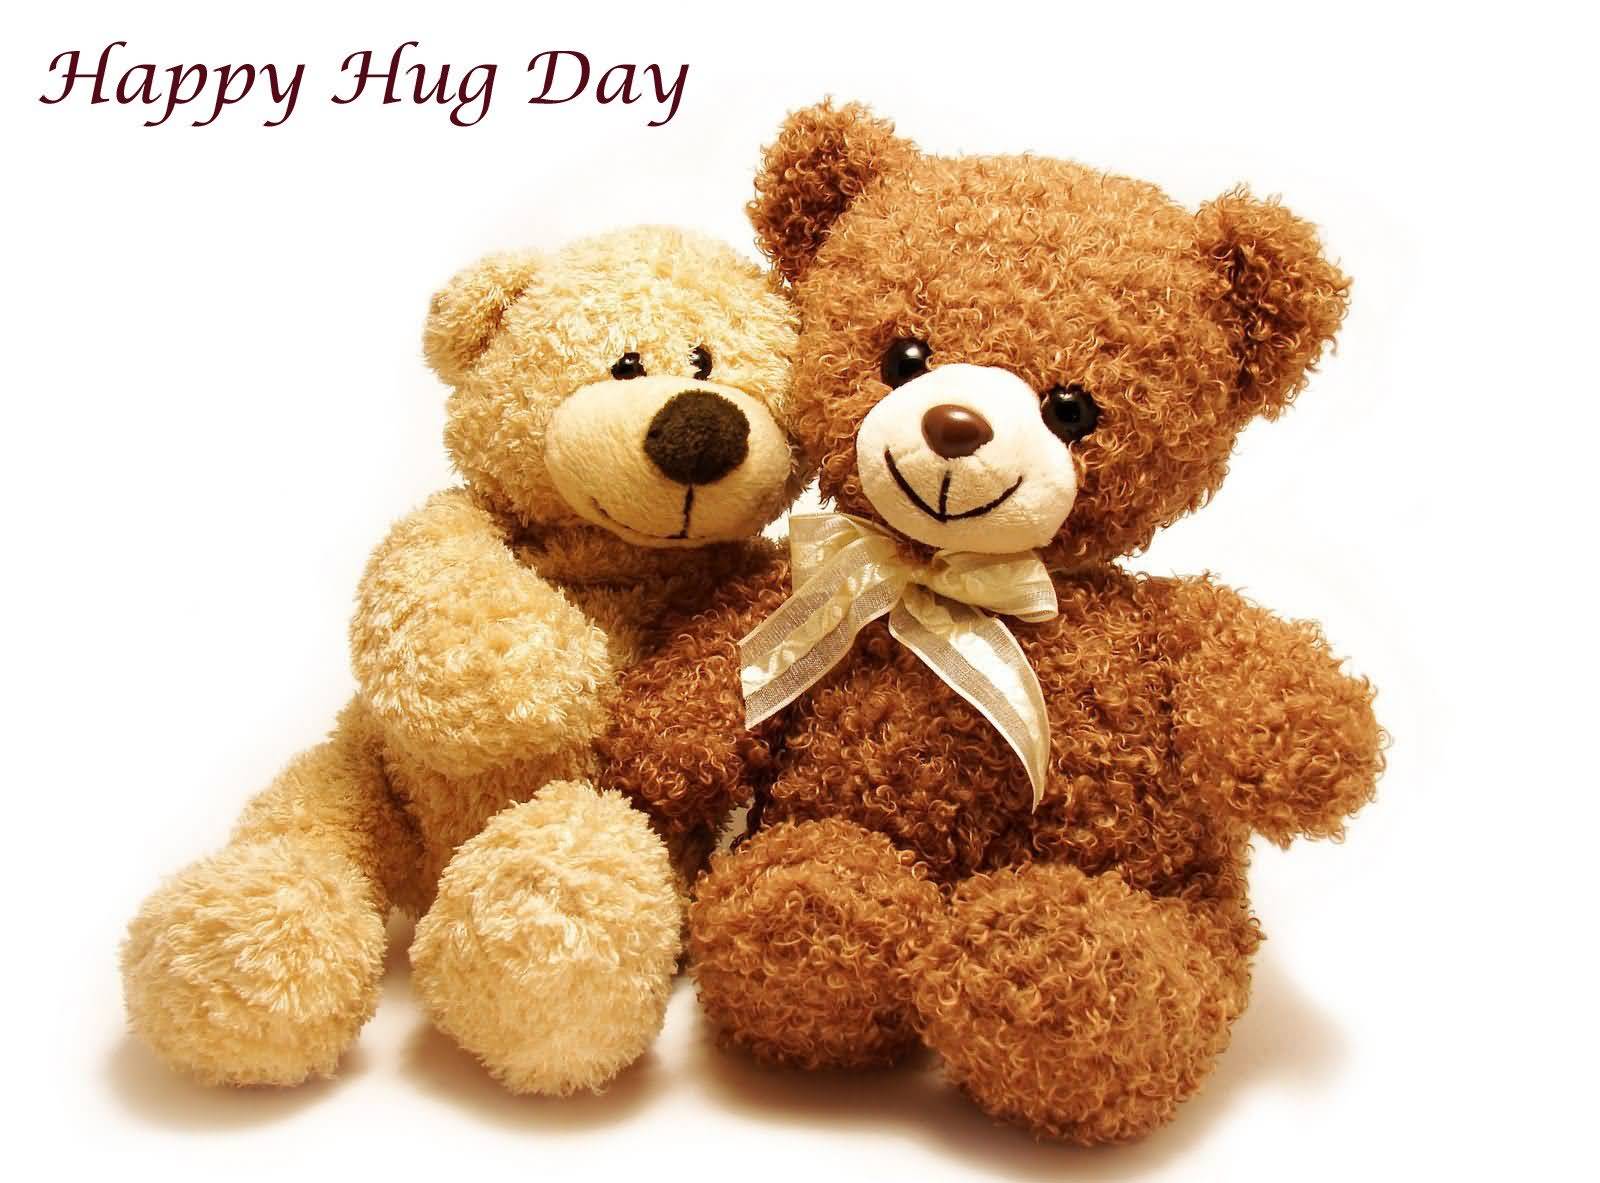 Happy Hug Day Two Teddy Bears Wallpaper